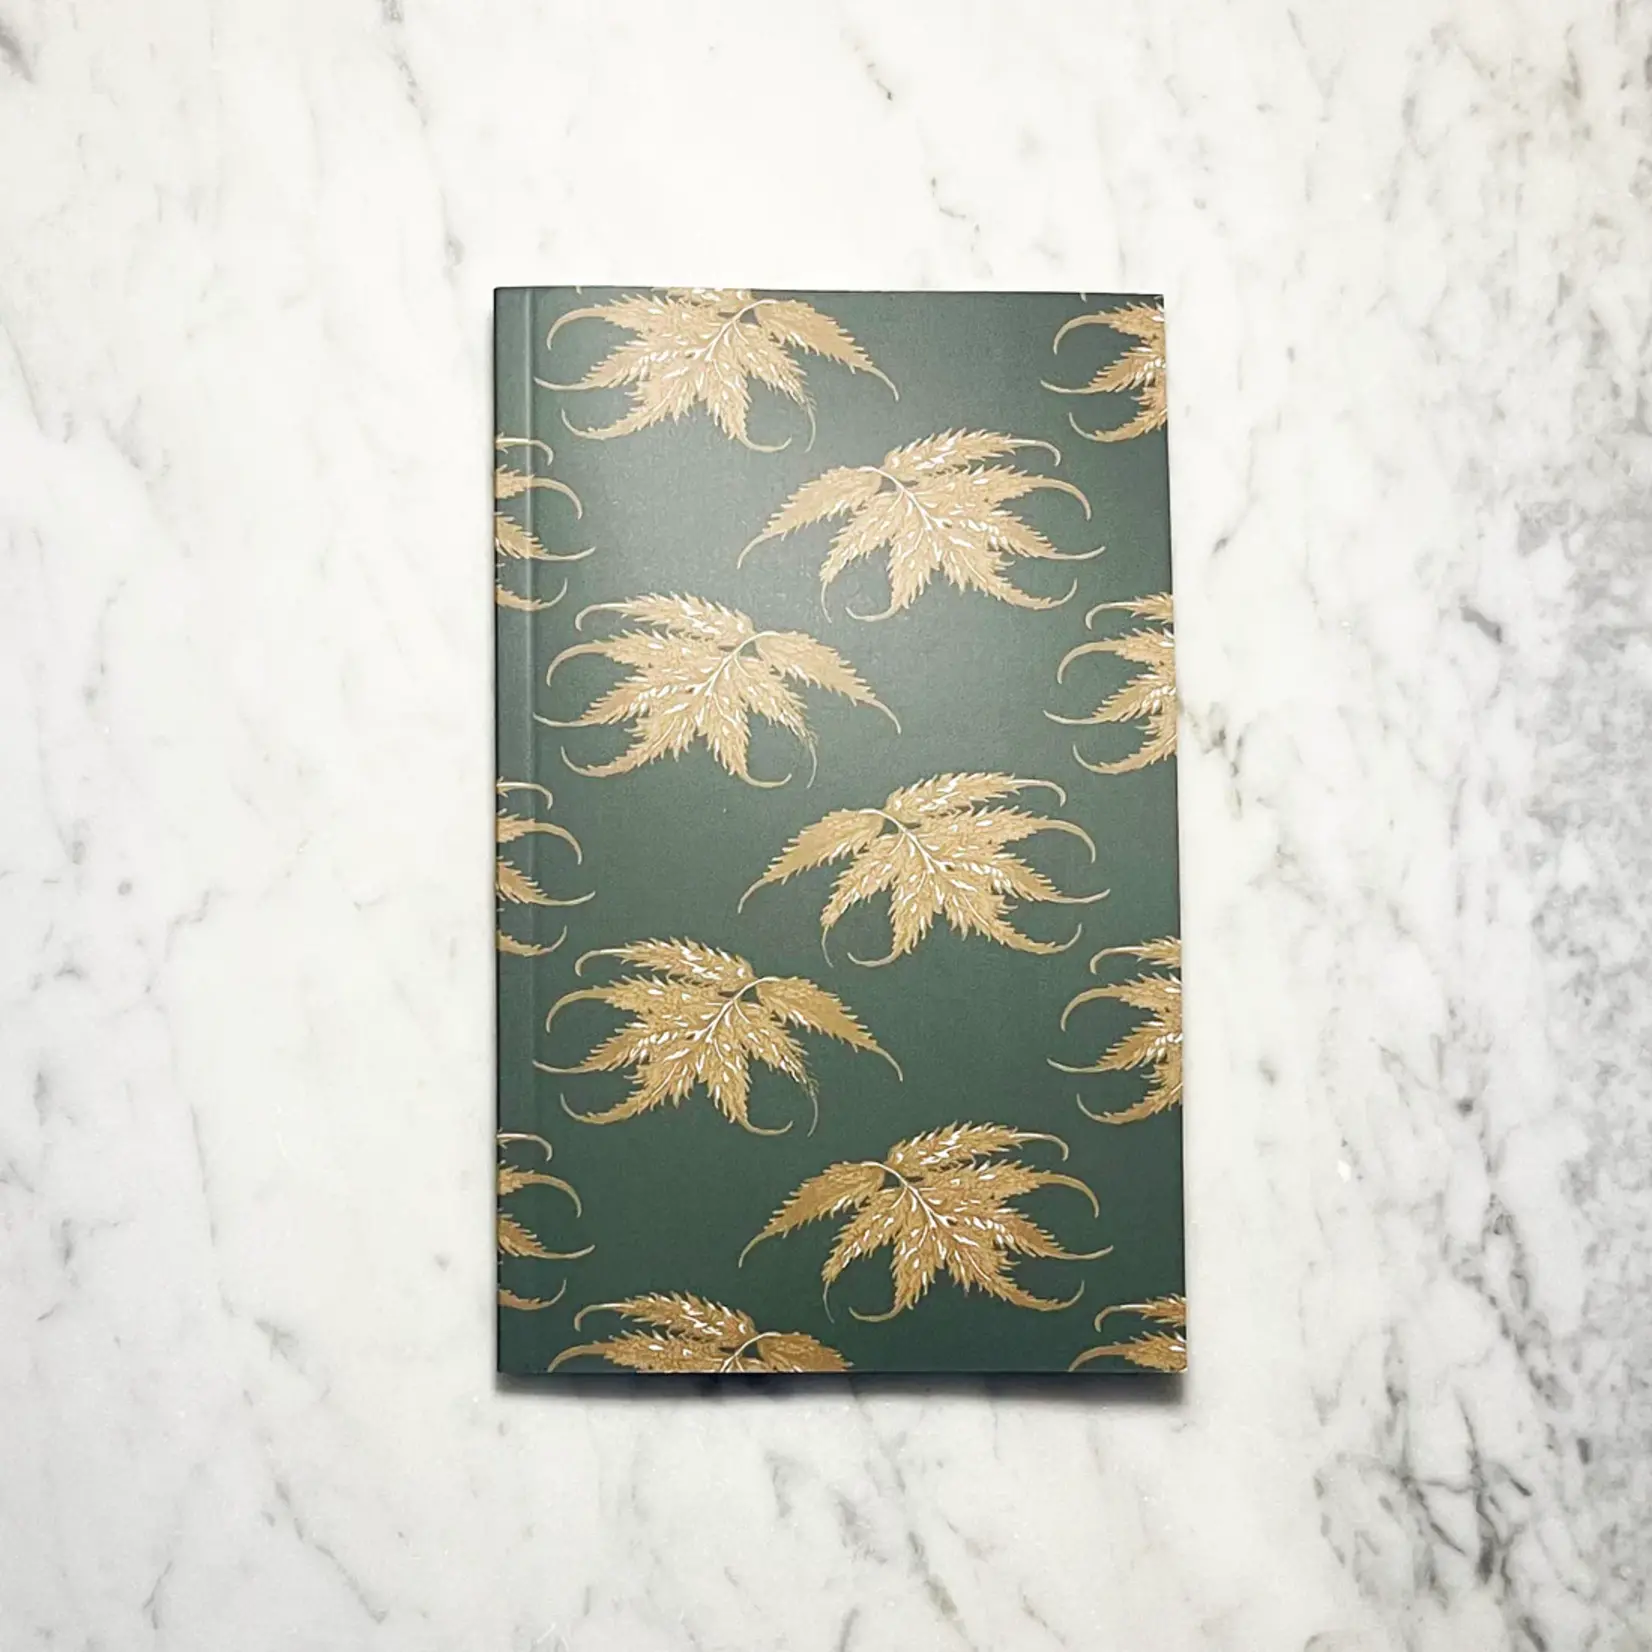 Set and Setting Stationary Leaf Ledger Pocket-Sized Notebook - emerald